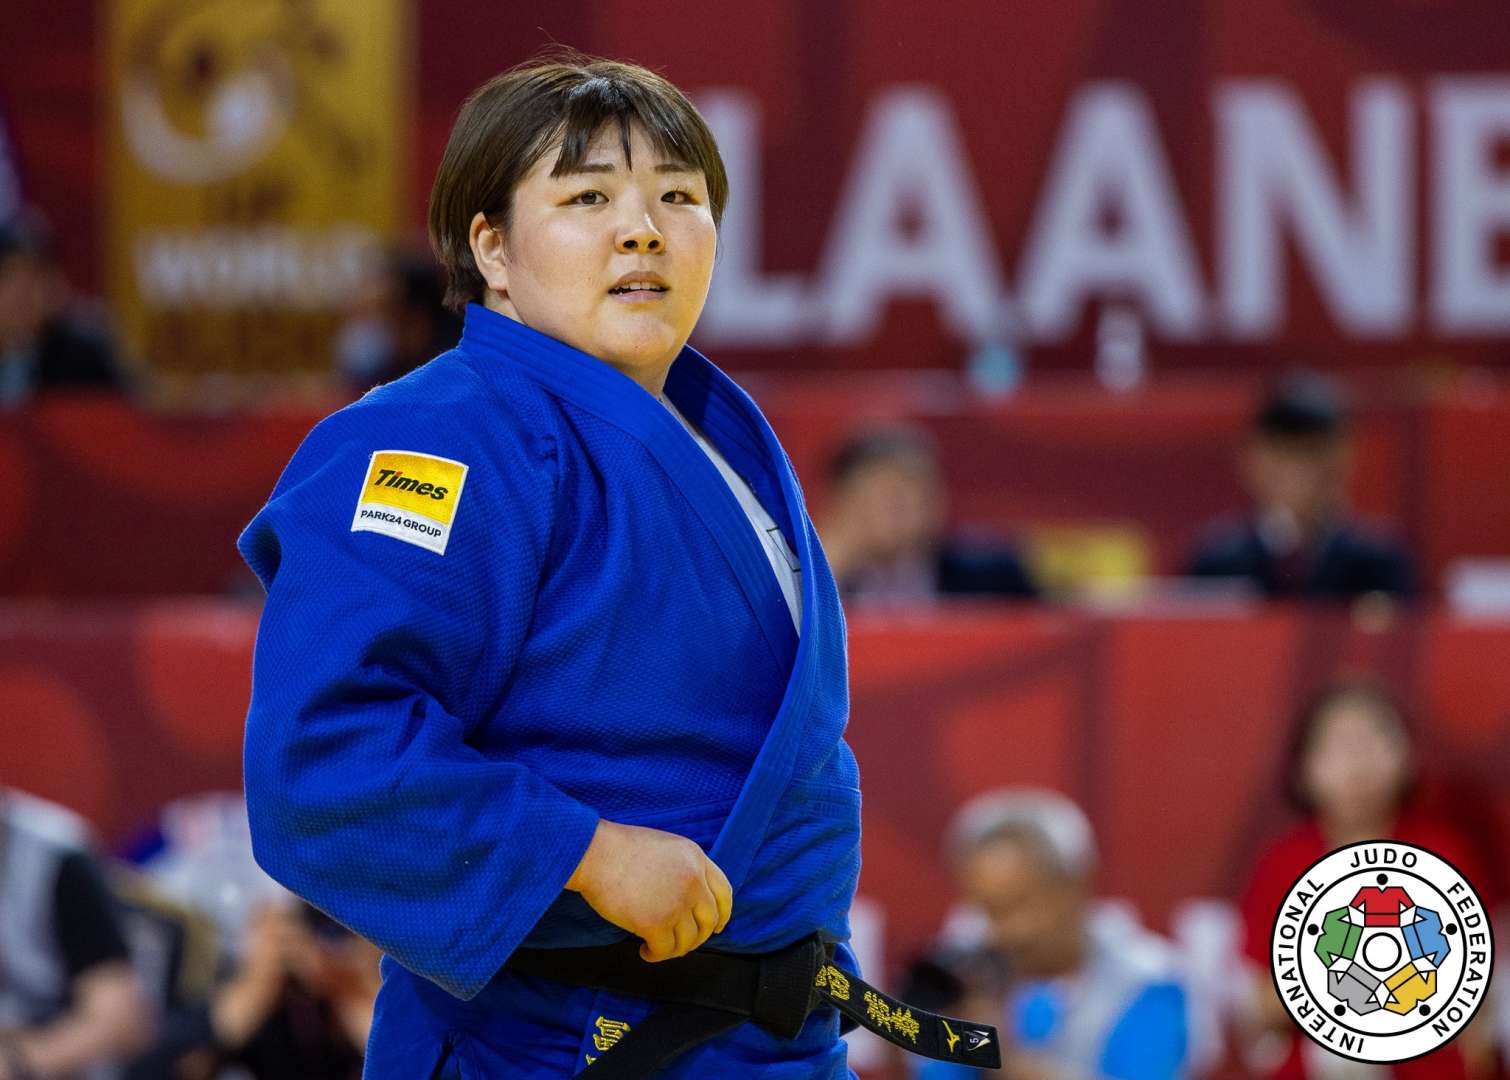 Mongolia hosting the World Jiu-Jitsu Championship 